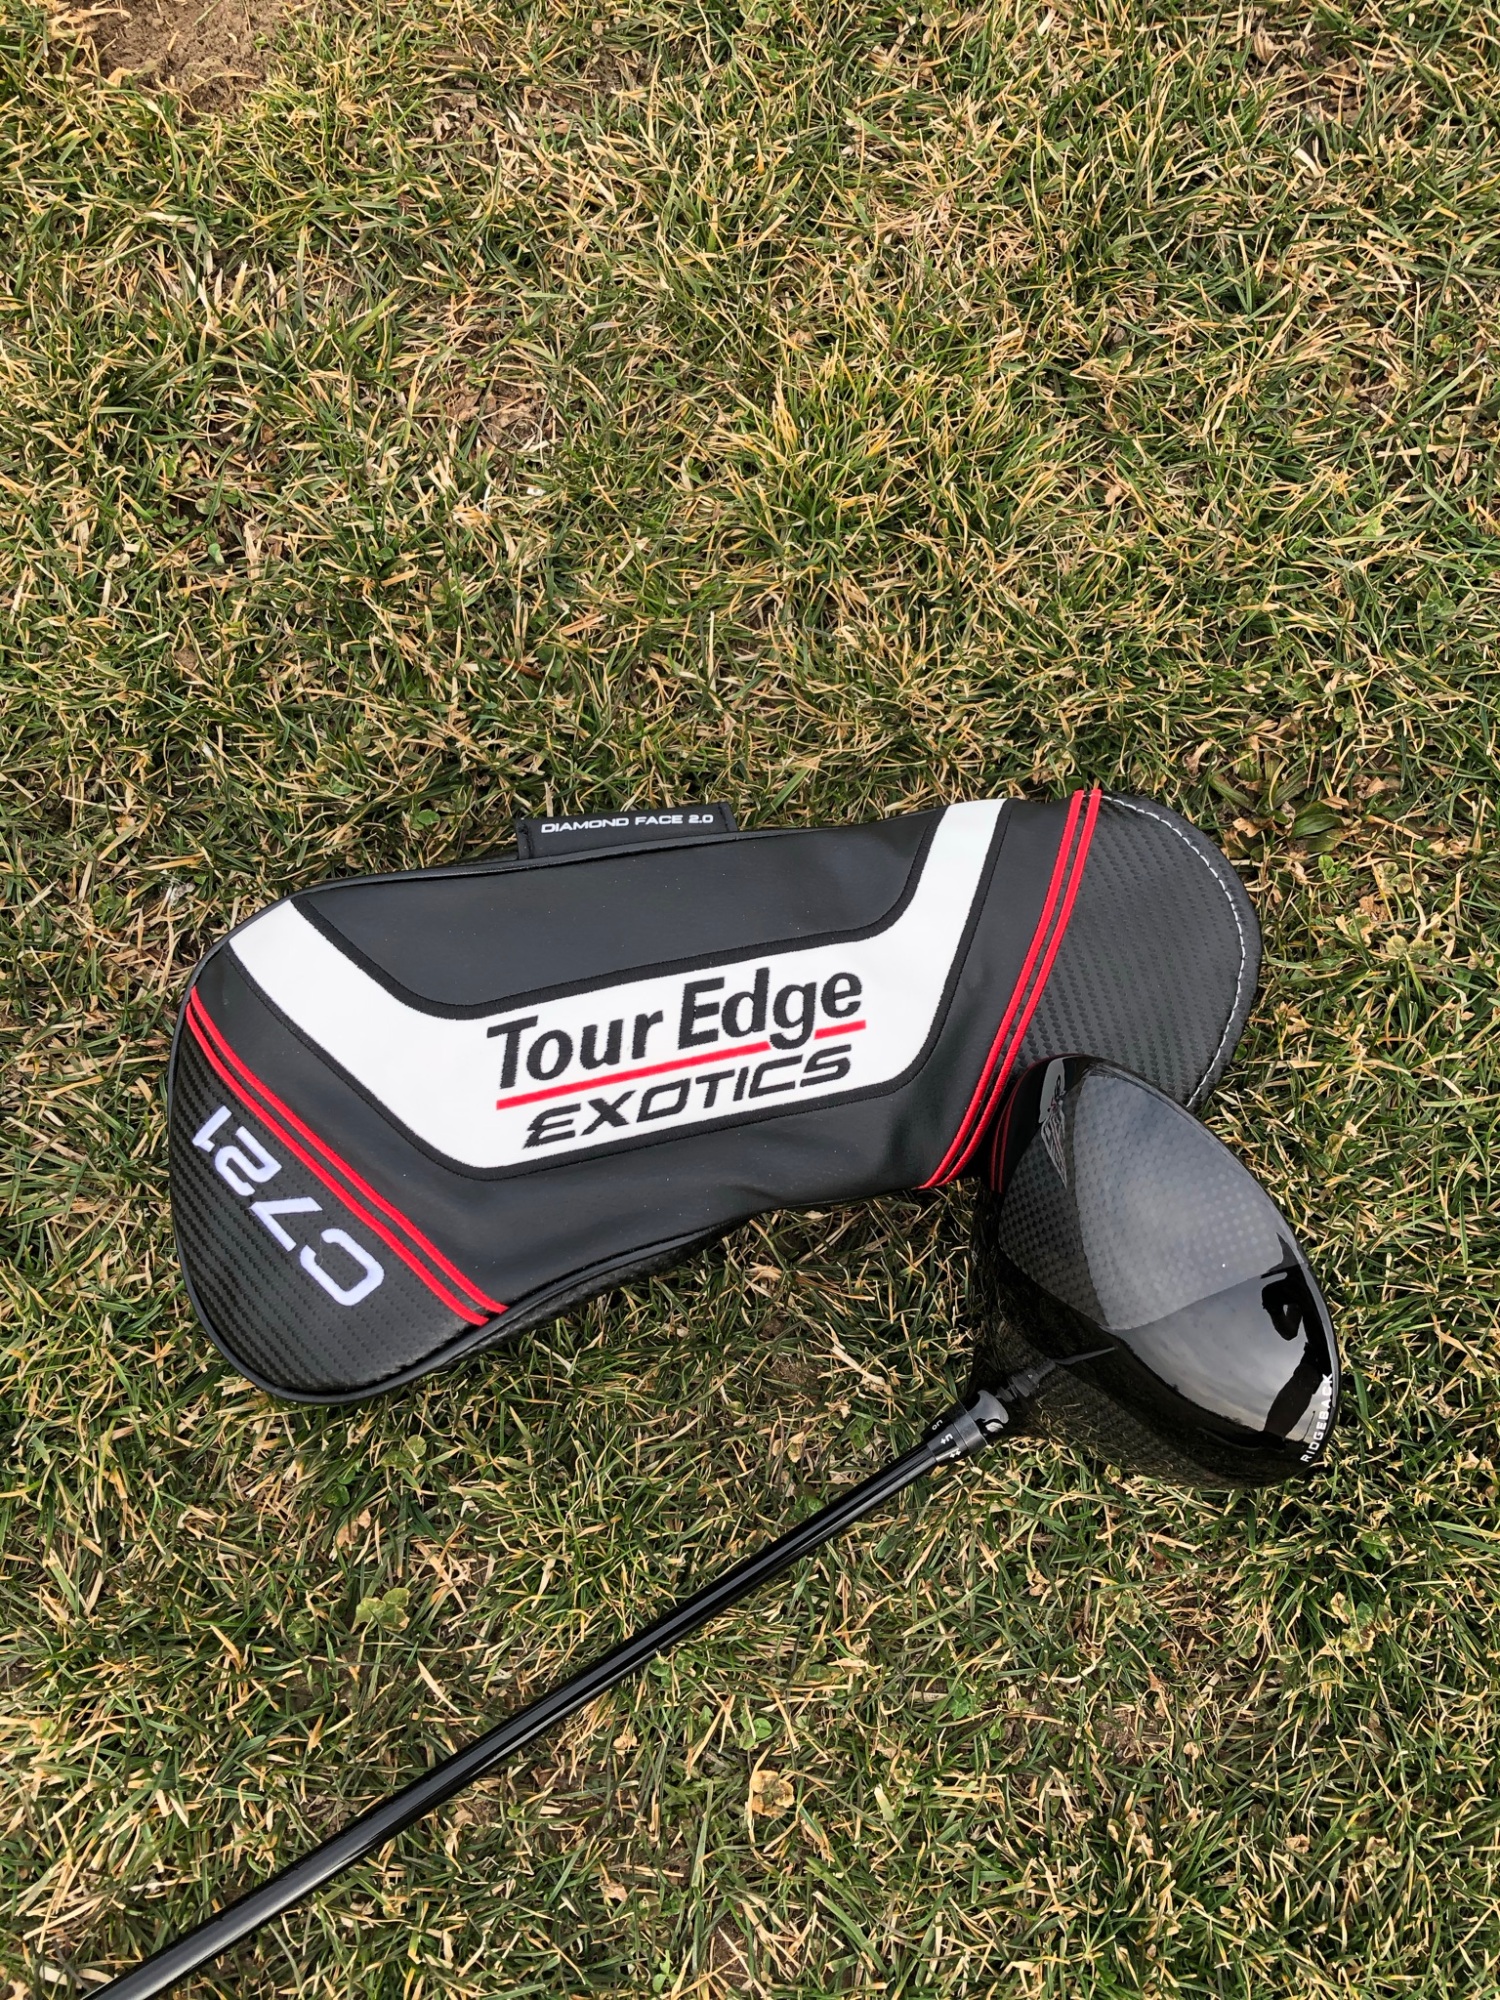 review tour edge golf clubs